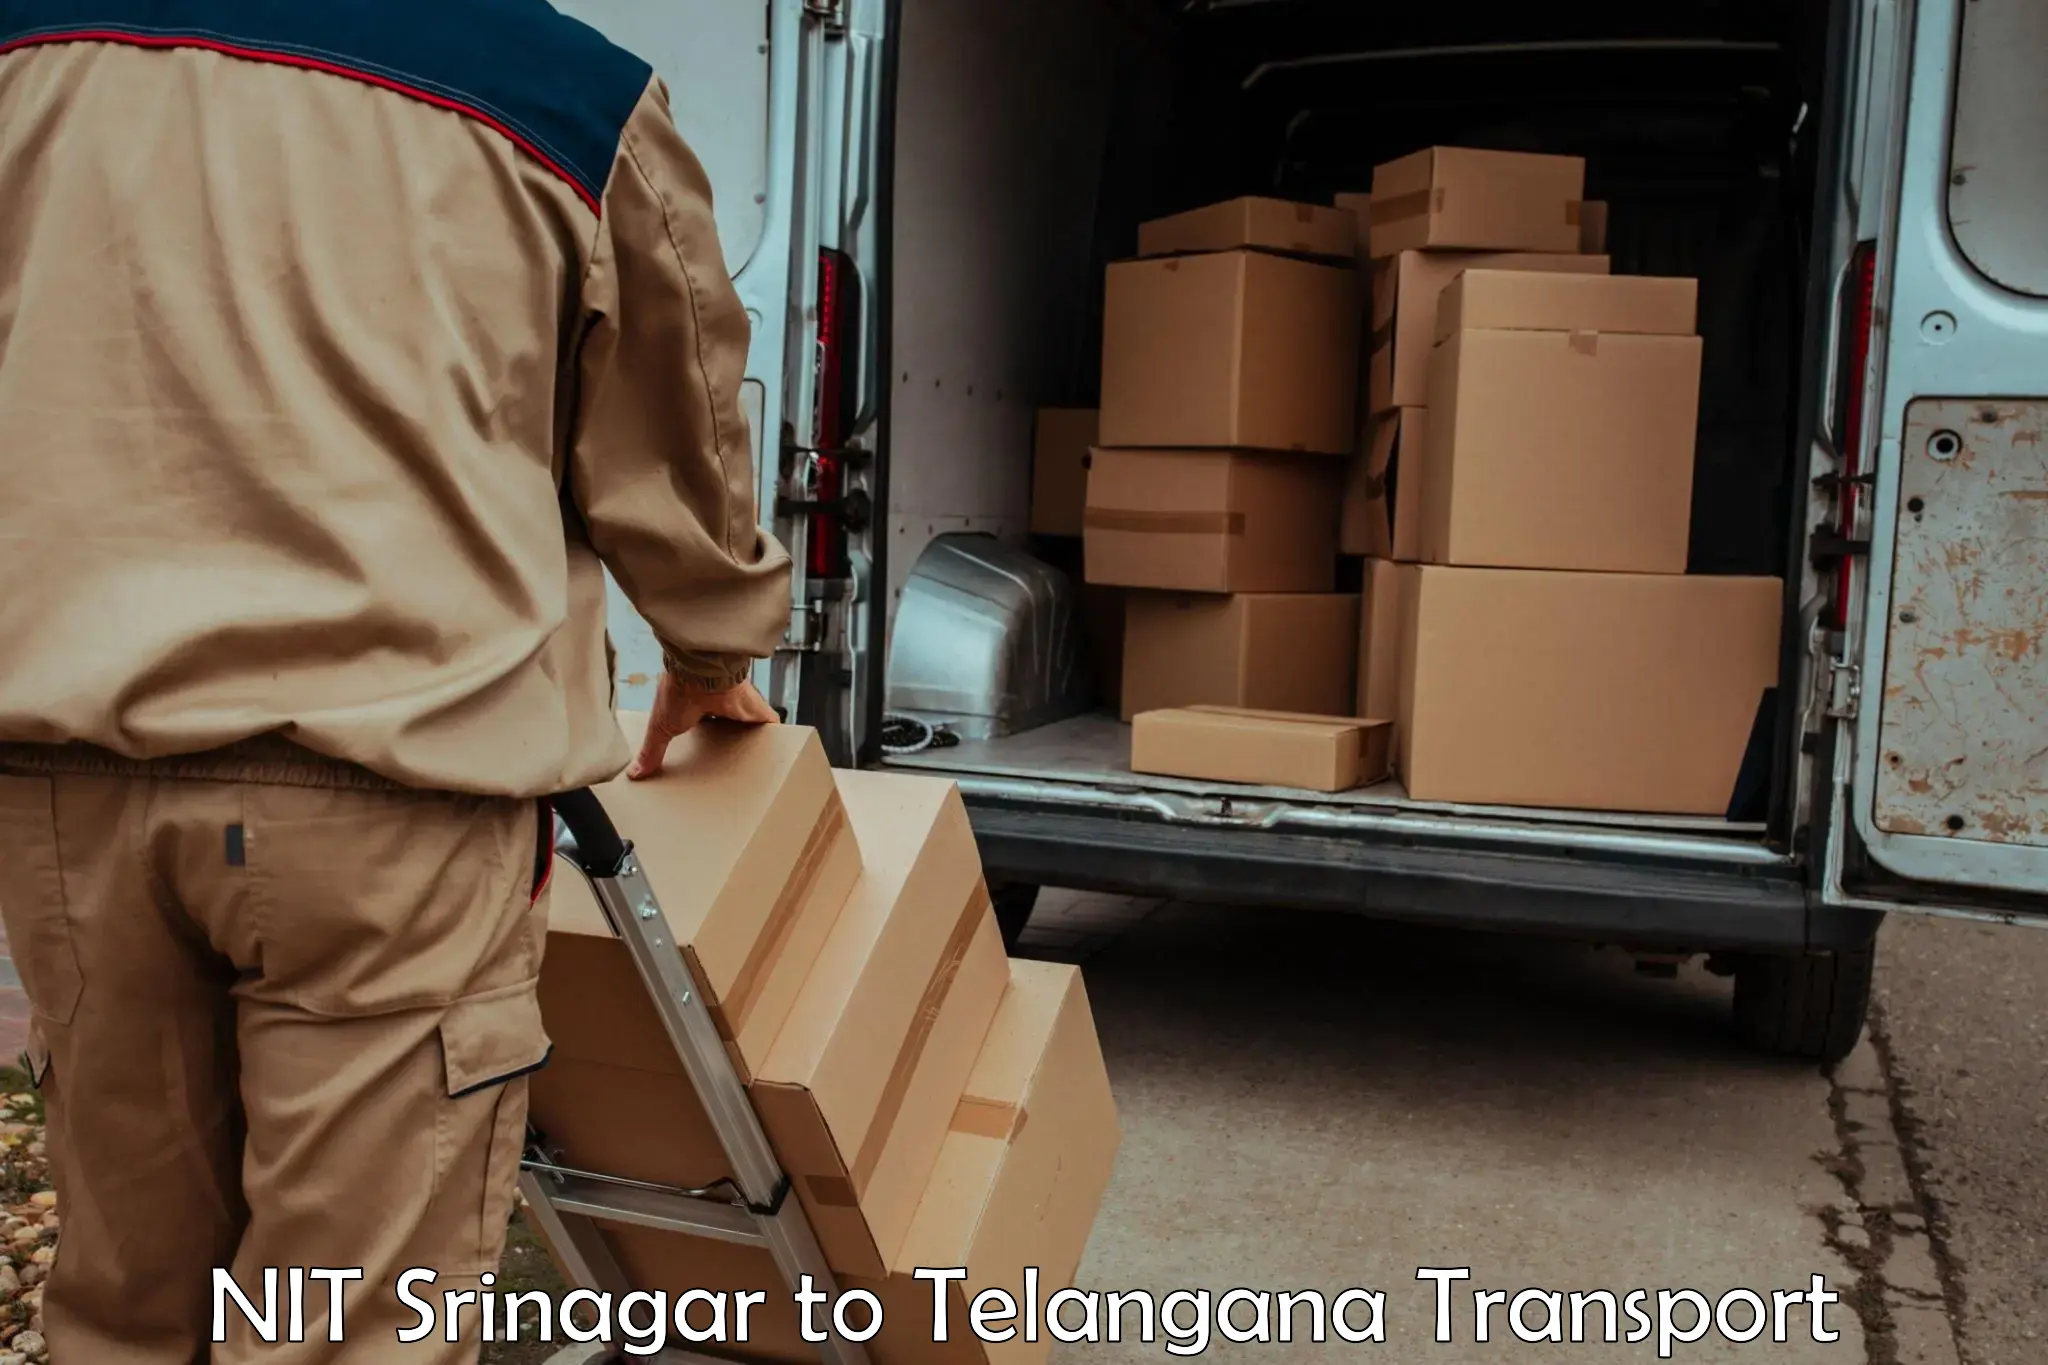 Commercial transport service NIT Srinagar to Dahegaon